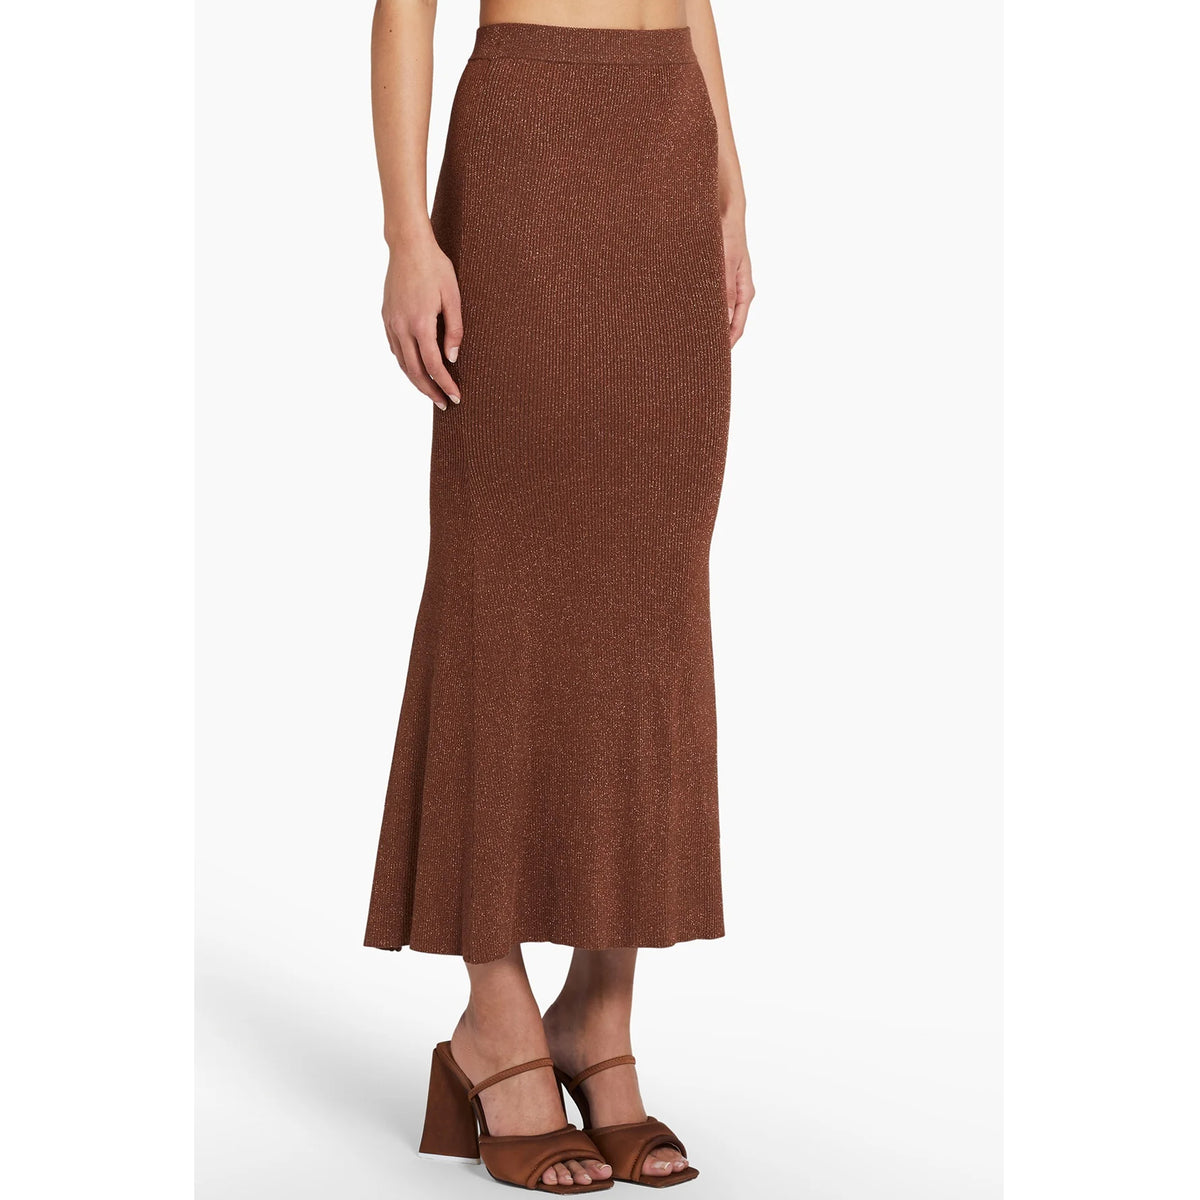 Amanda Uprichard Vanita Knit Skirt in Brown/Copper